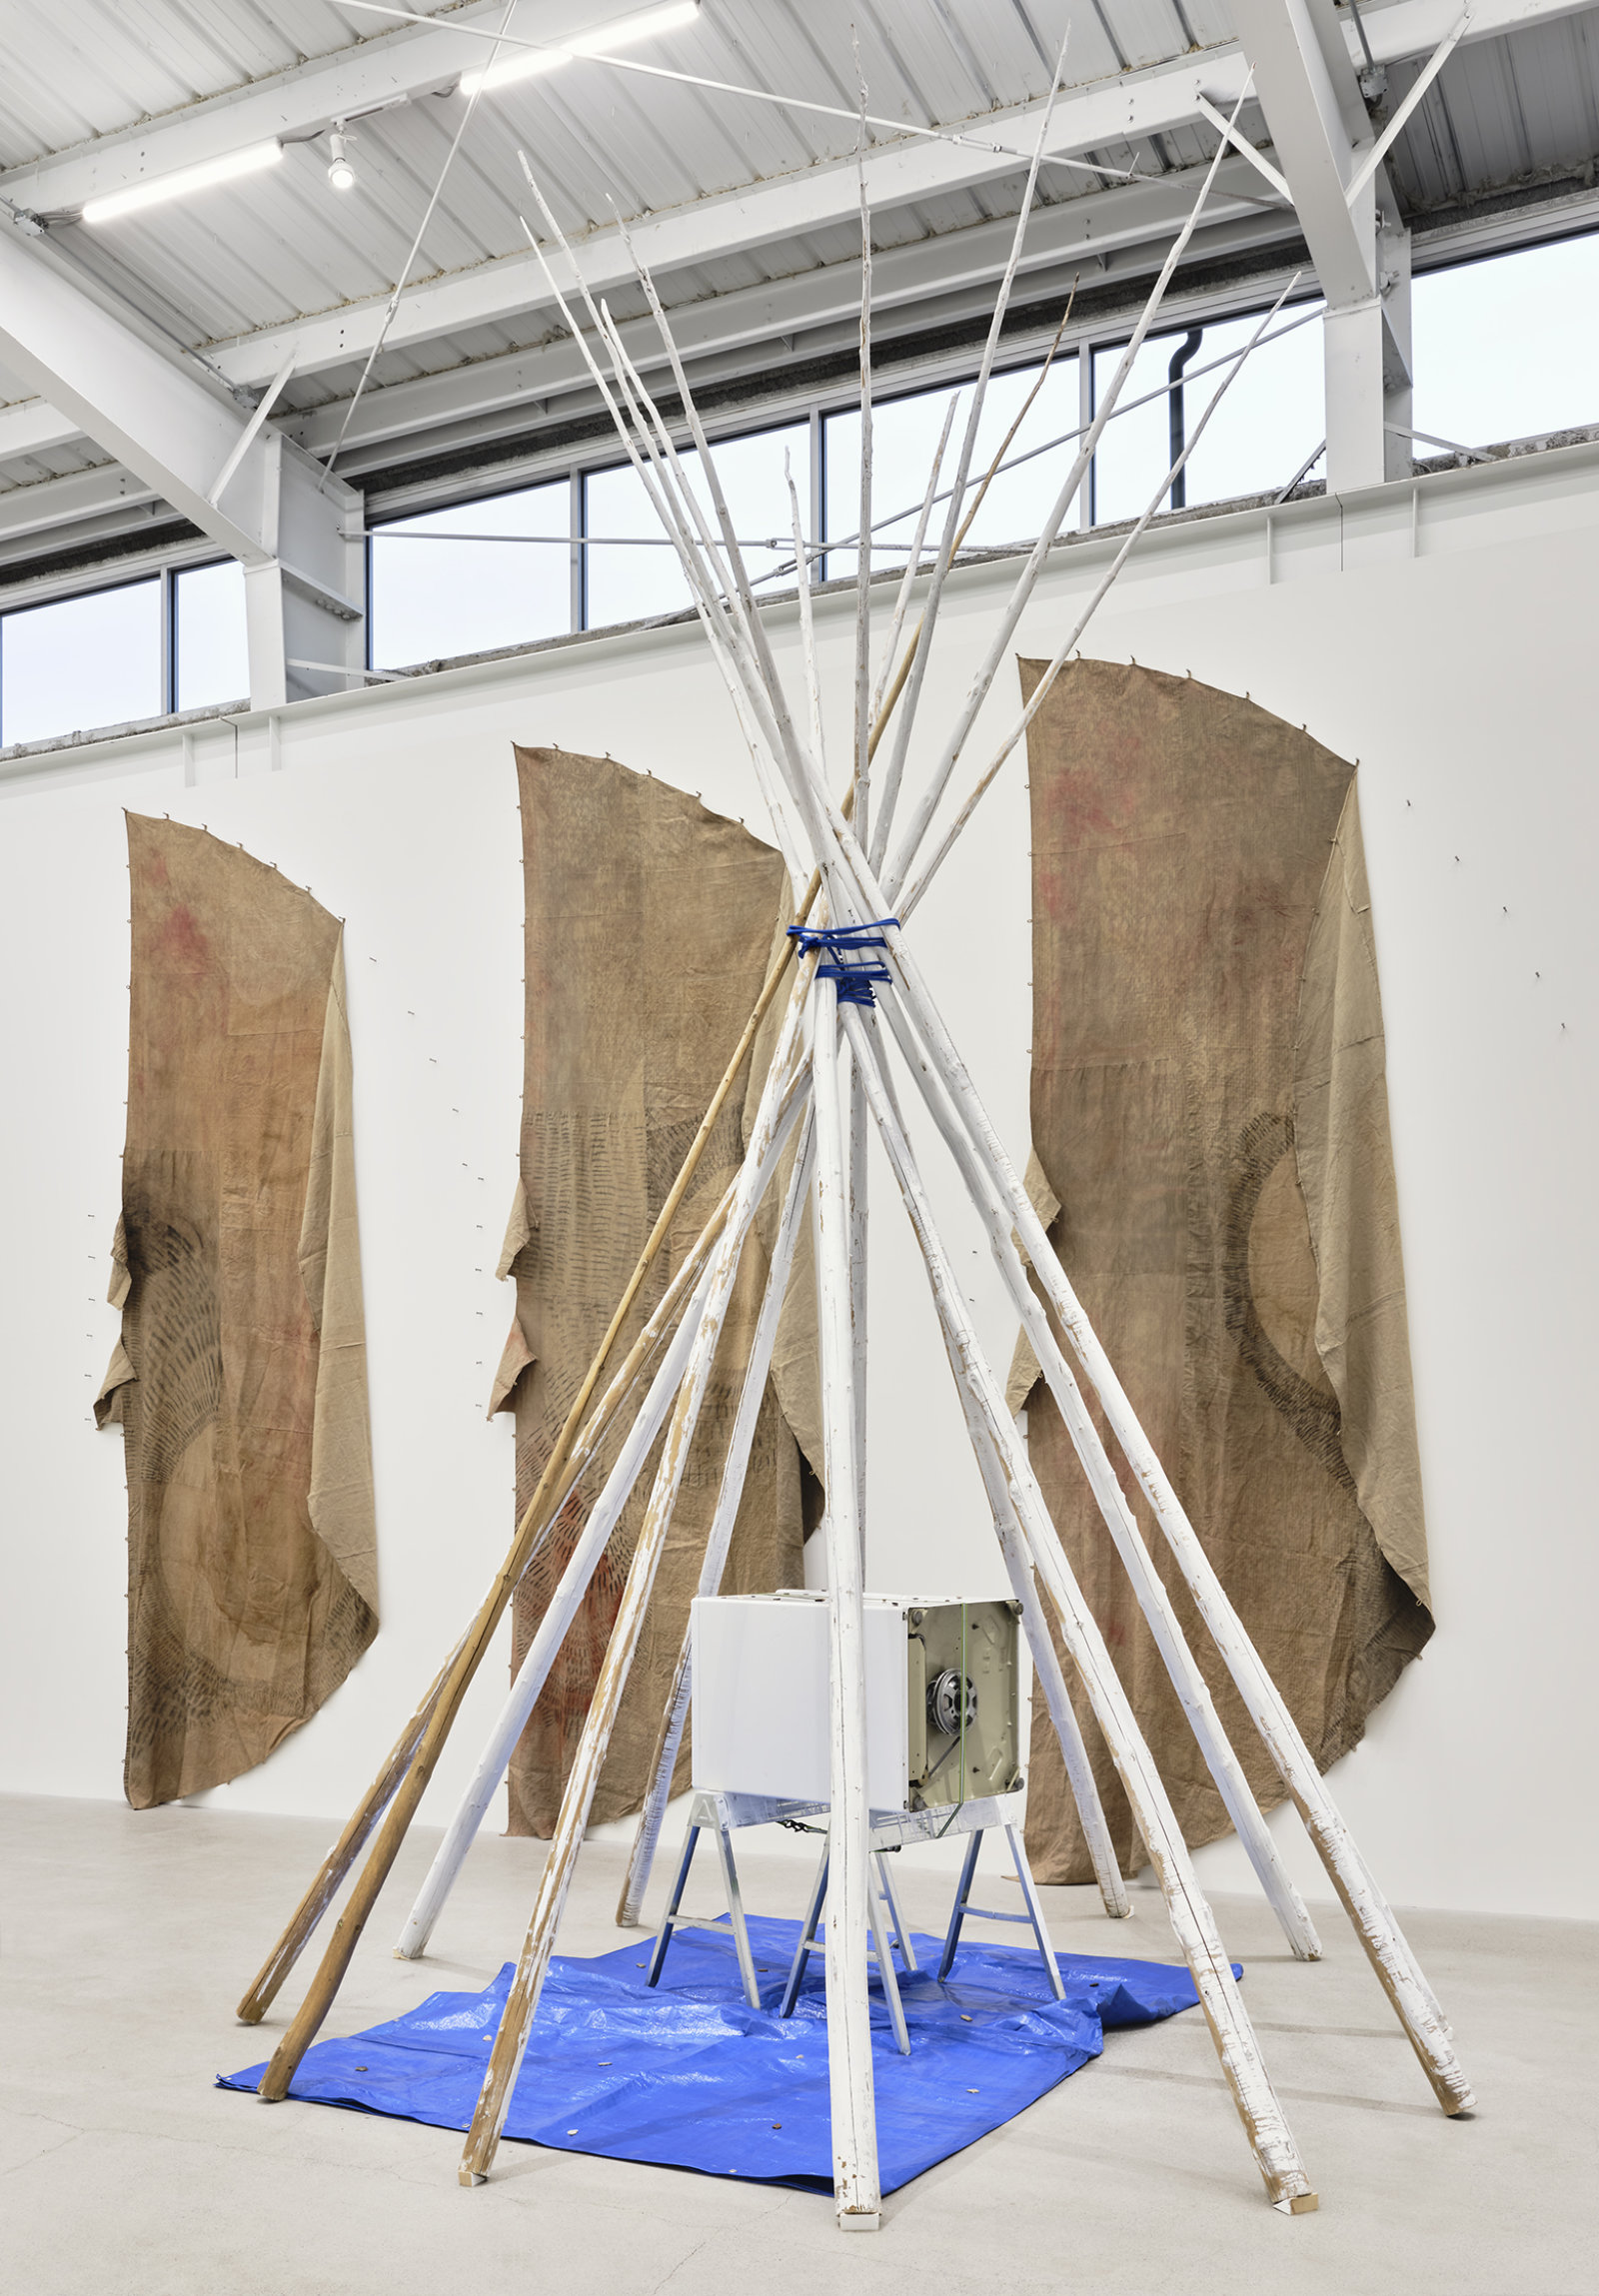 Duane Linklater, anteclovis, 2020, tipi poles, paint, nylon rope, tarpaulin, steel sawhorses, washing machine, tie-down strap, arrowheads, 230 x 158 x 158 in. (584 x 401 x 401 cm)